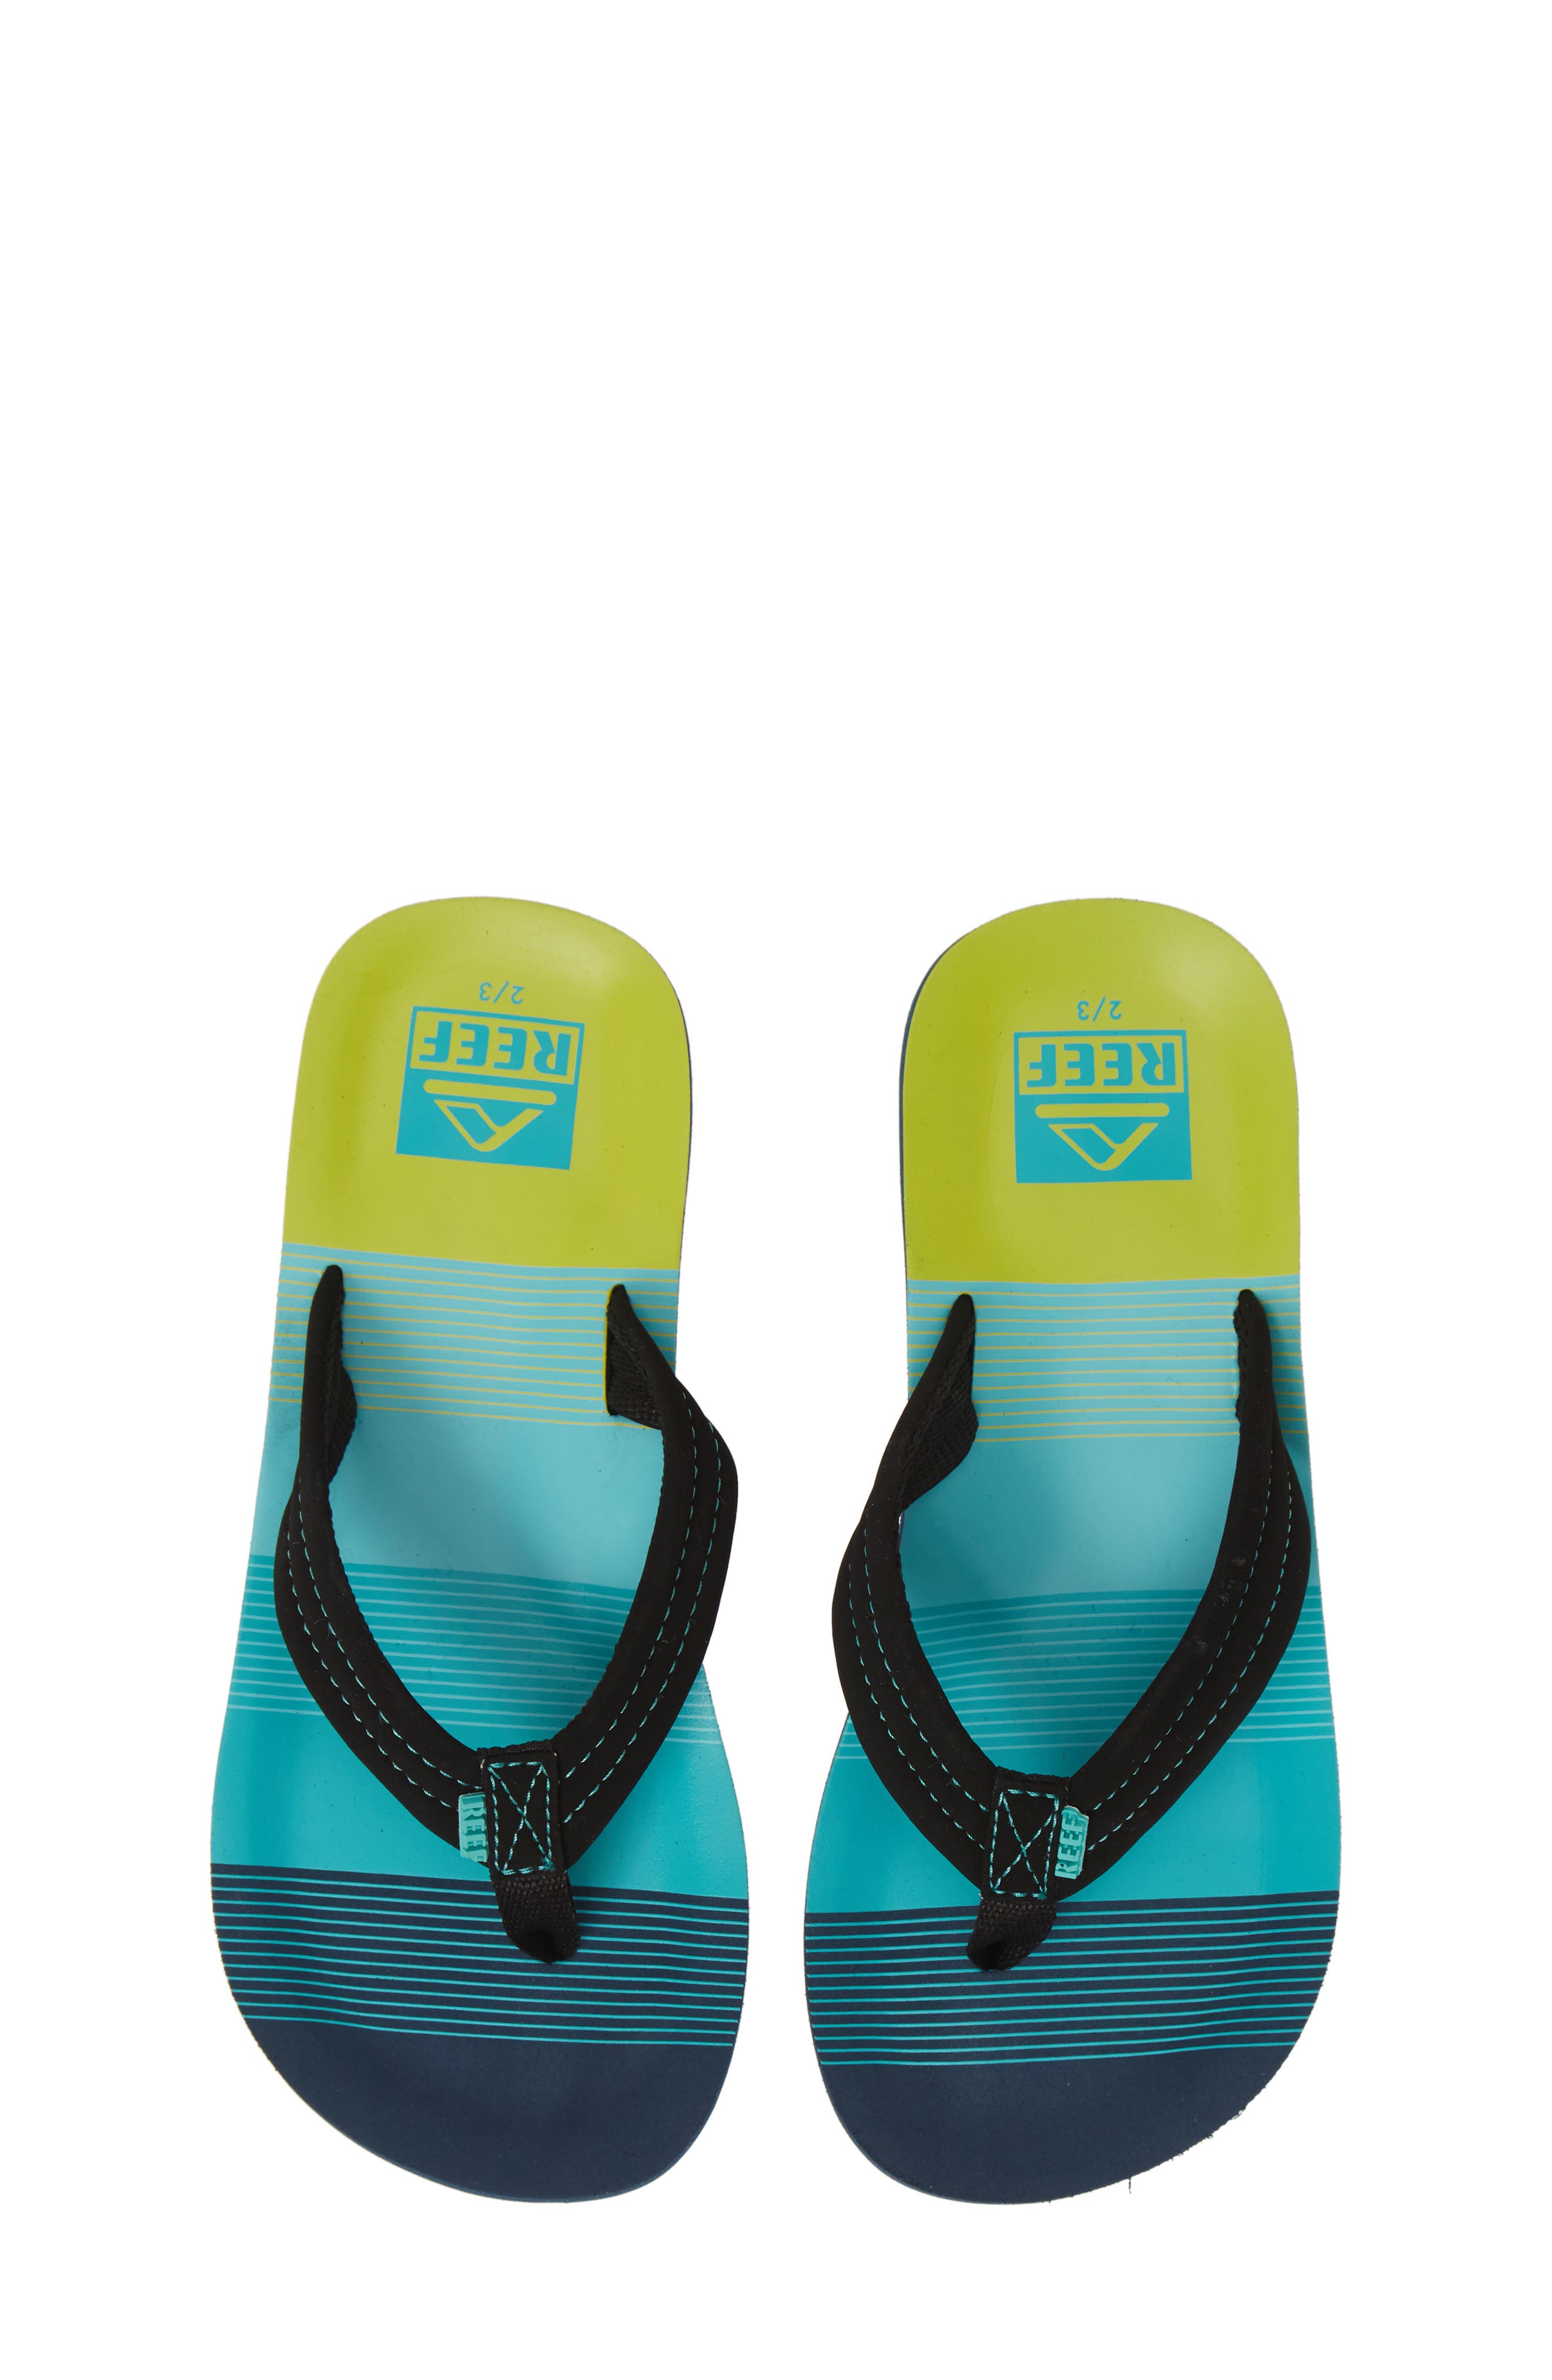 nordstrom reef sandals